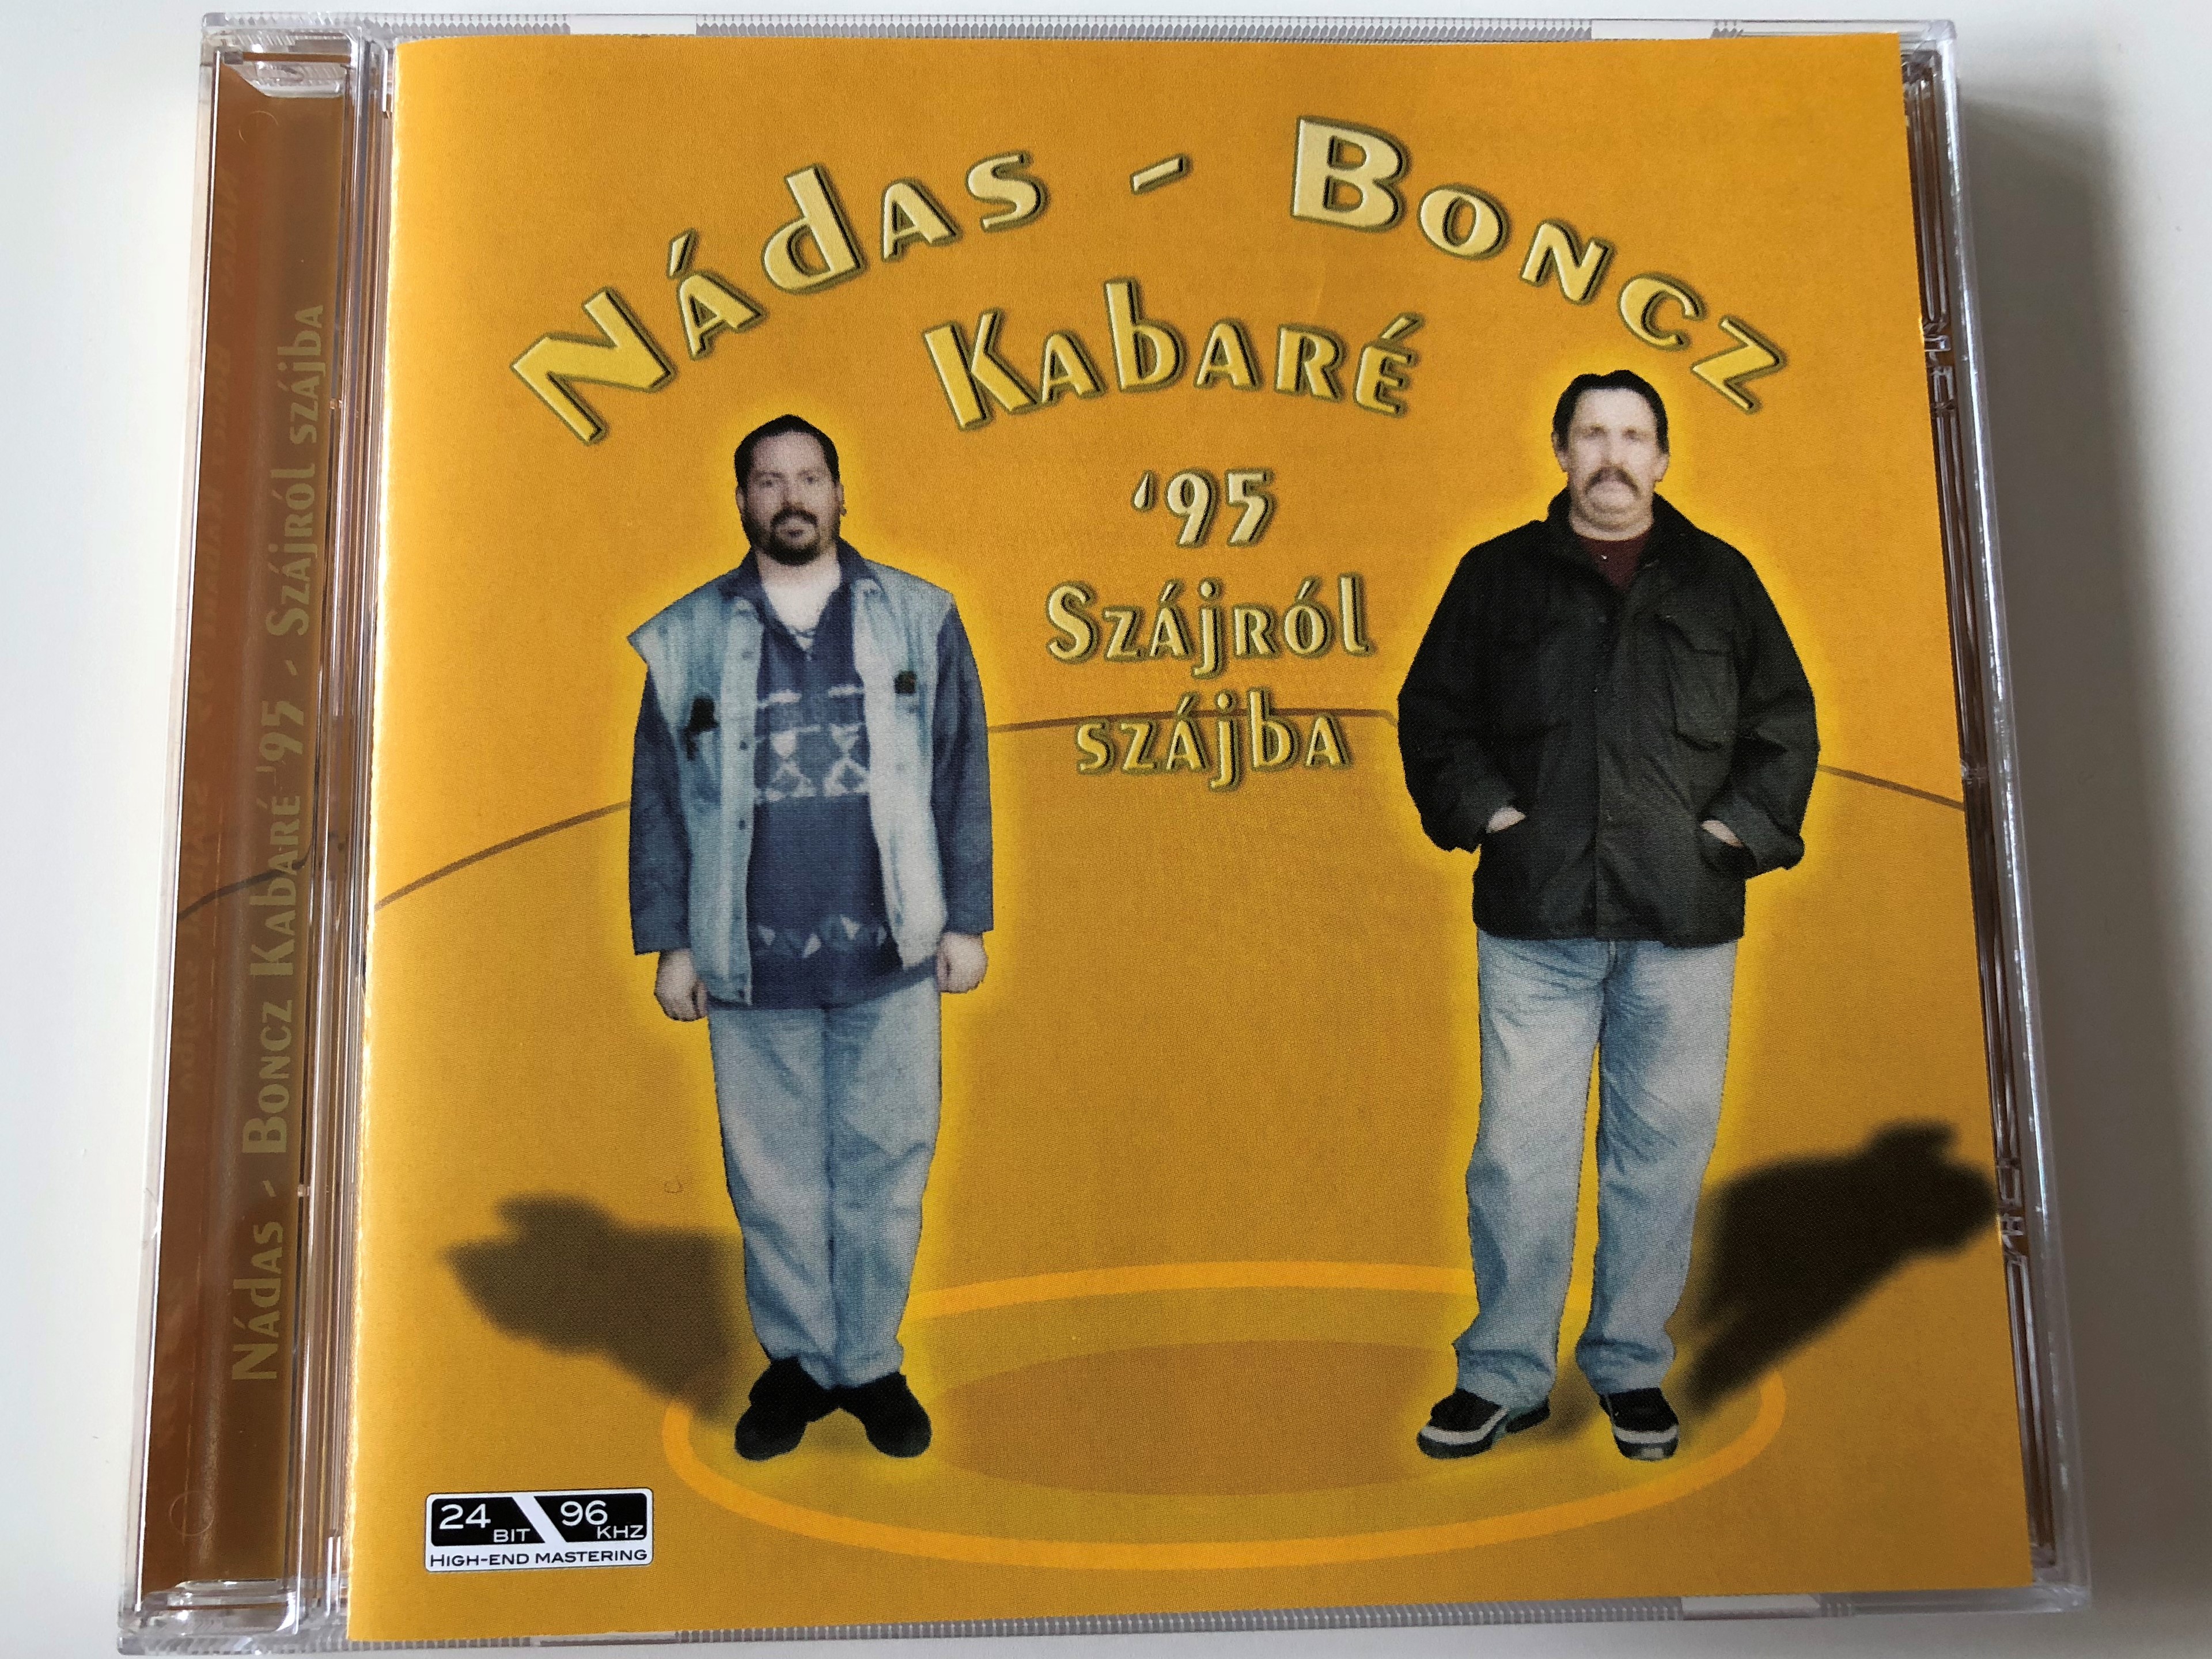 n-das-boncz-kabar-95-cd-2005-sz-jr-l-sz-jba-hungarian-comedy-1-.jpg